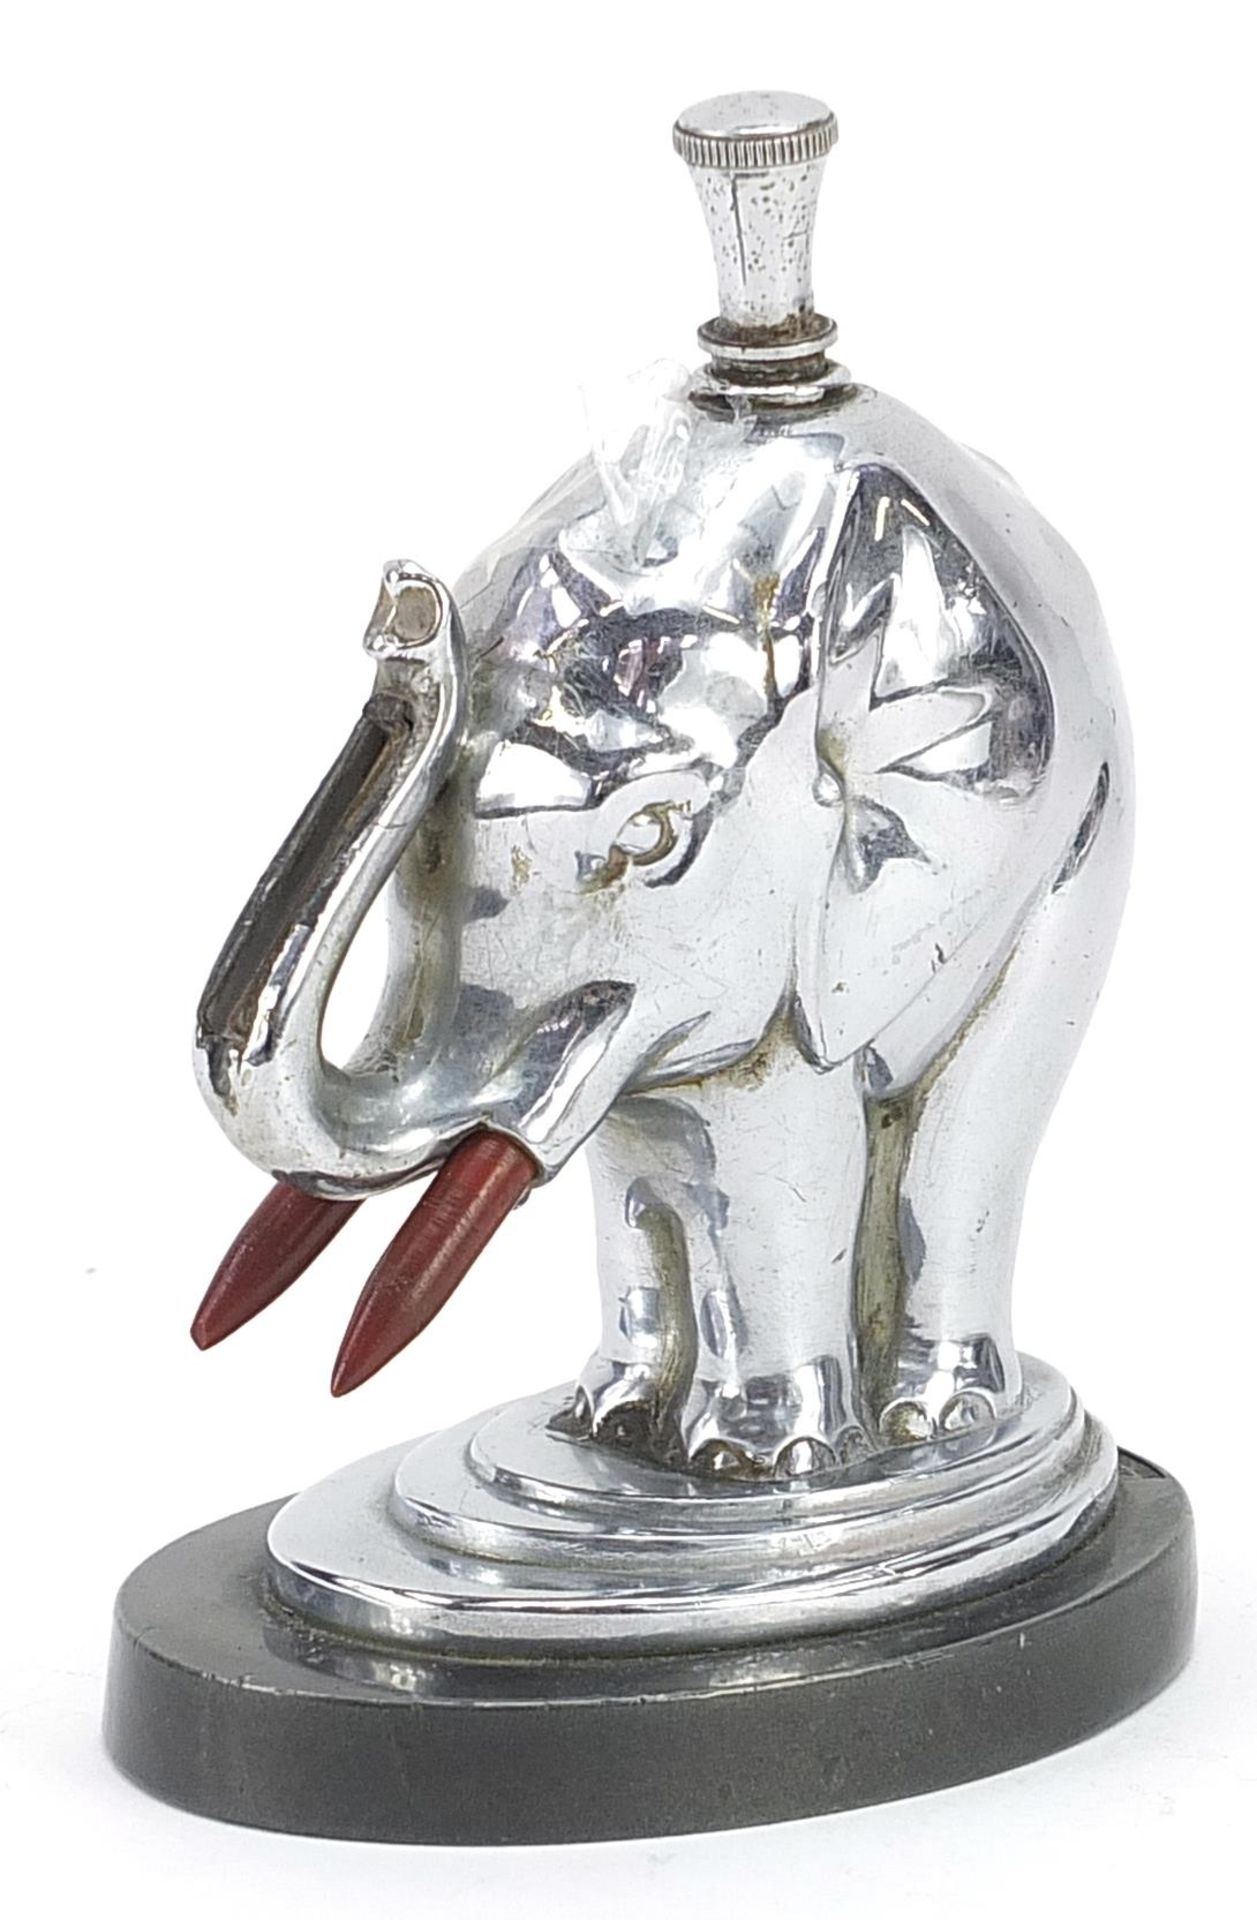 Ronson, Art Deco chrome plated elephant table lighter by Art Metal Works, 13cm high